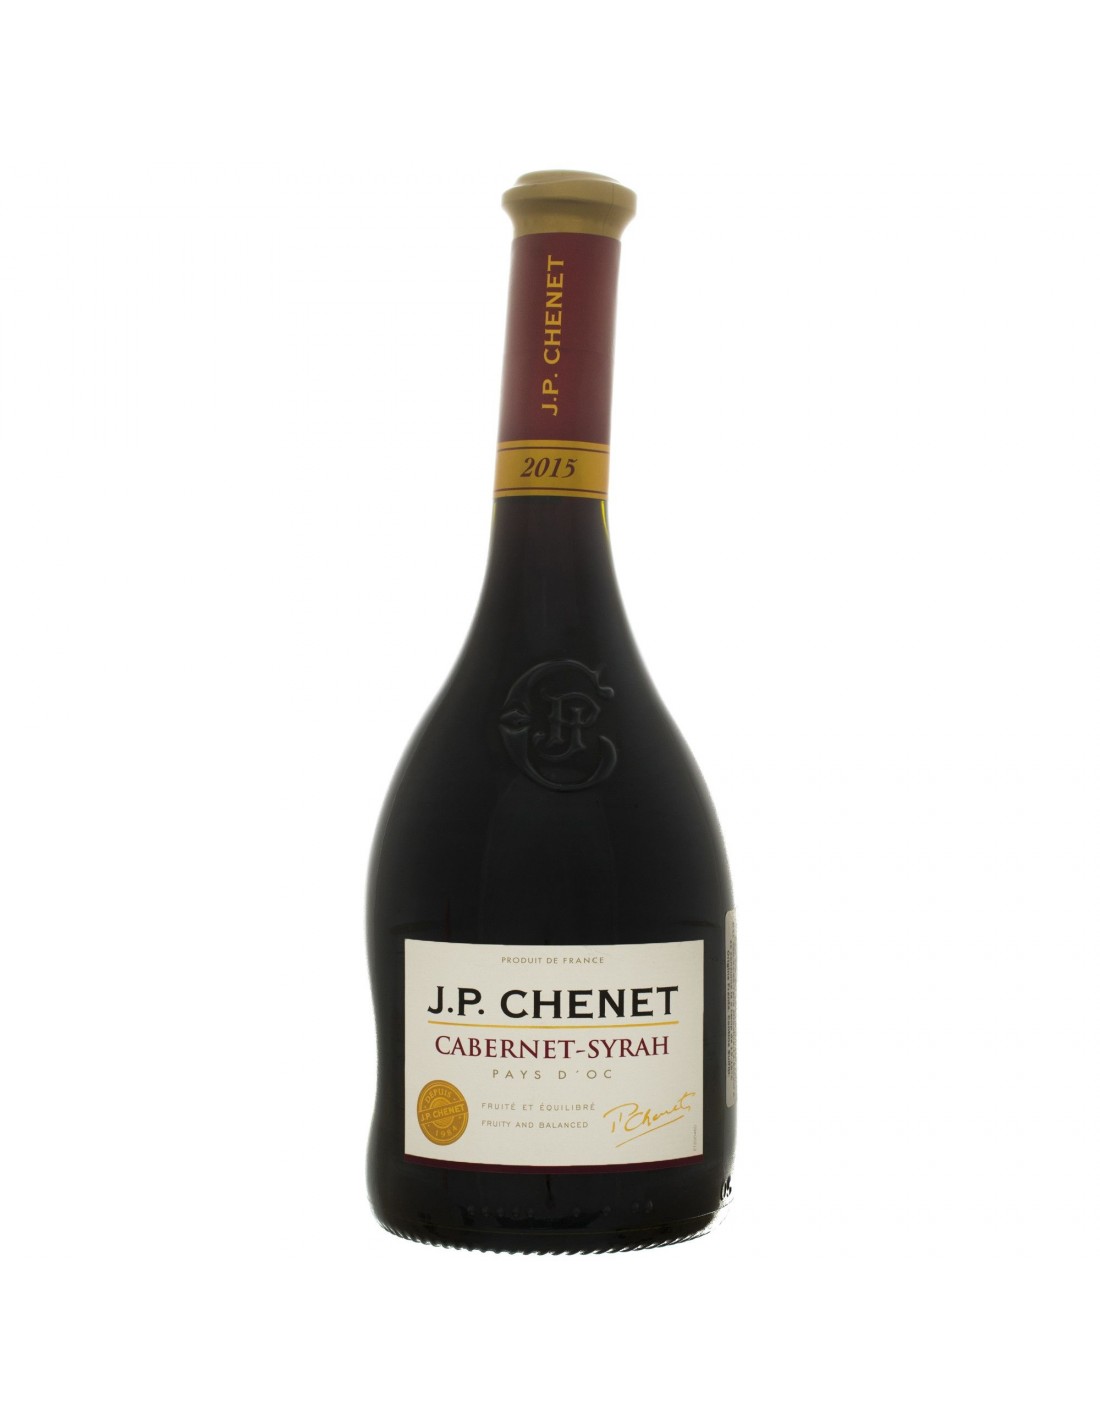 Vin rosu sec, Cabernet – Syrah, JP Chenet Pays d’Oc, 0.75L, 12.5% alc., Franta alcooldiscount.ro